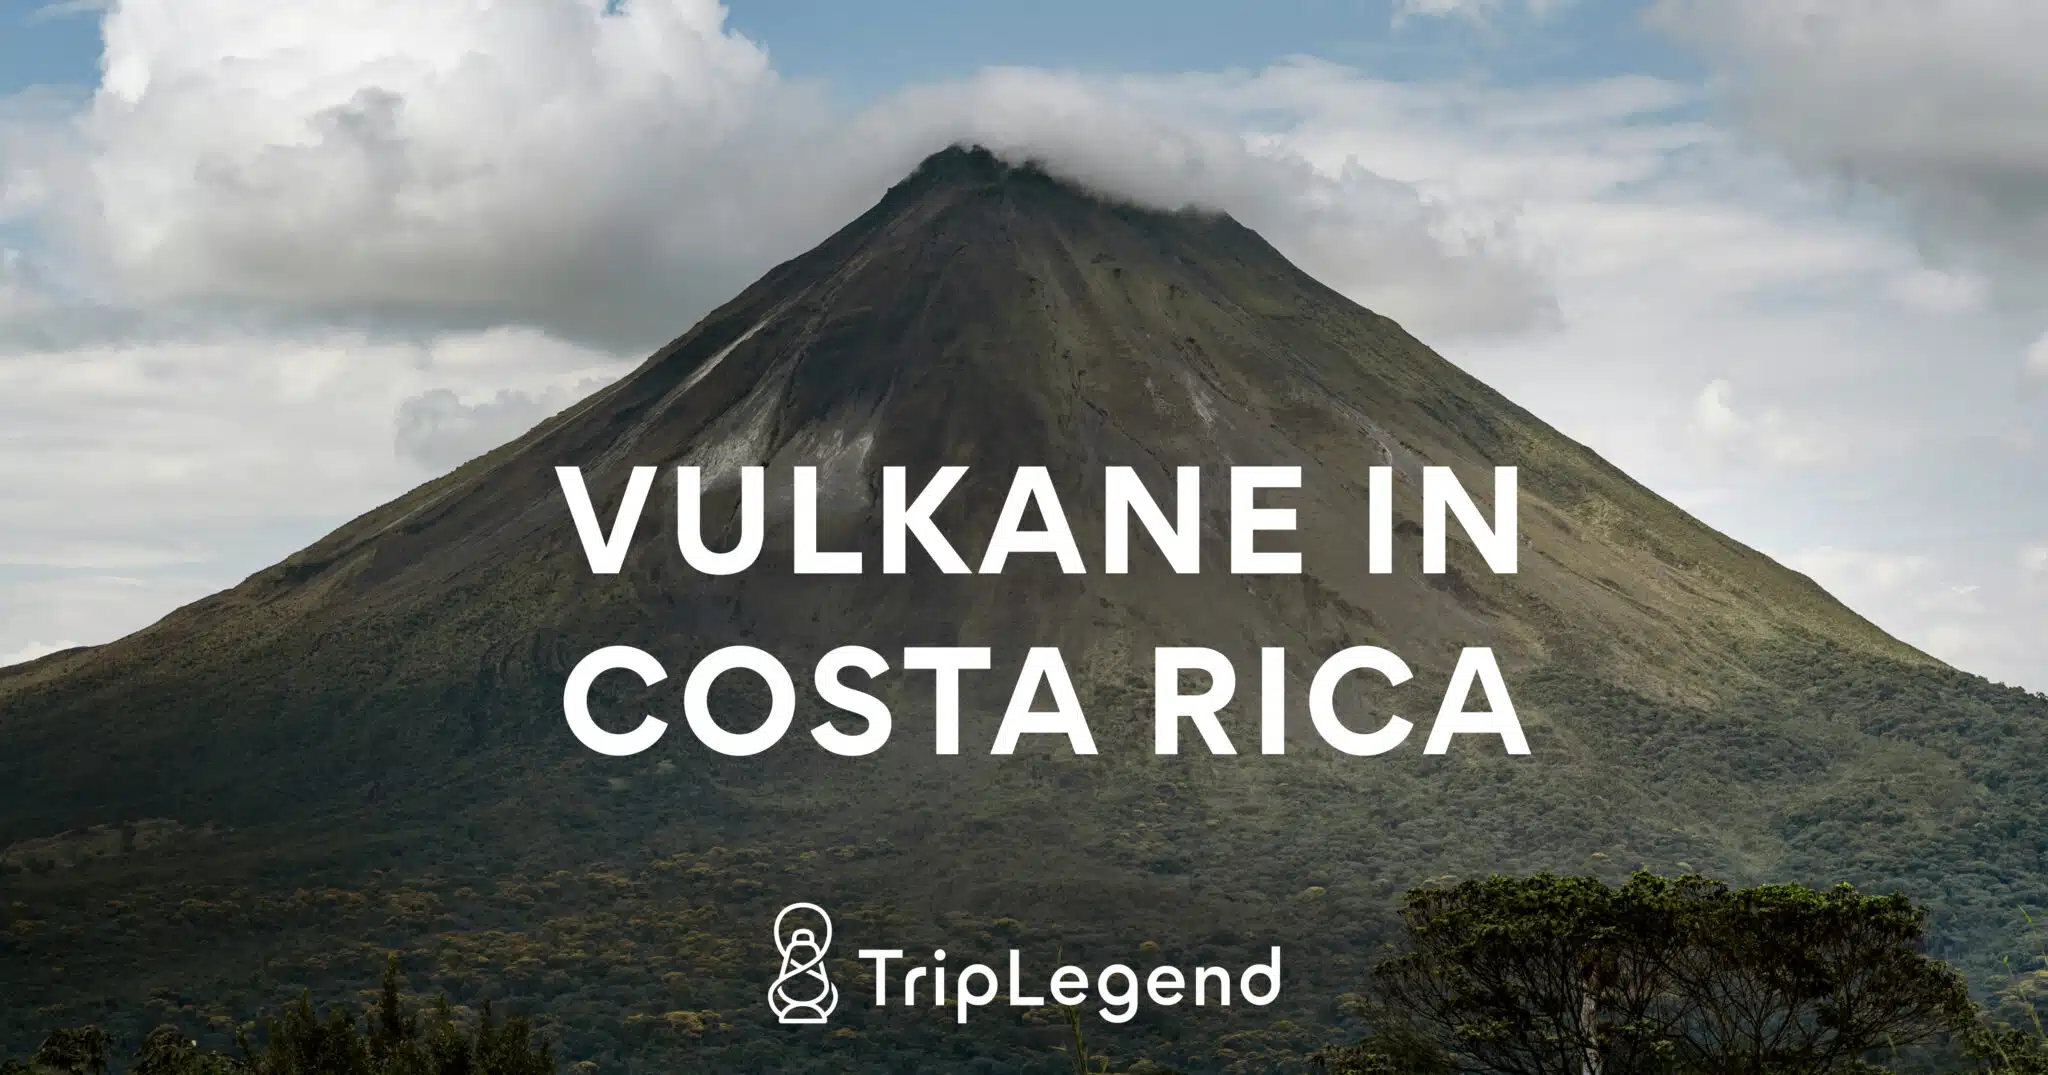 Vulkaner i Costa Rica skaleret.jpg